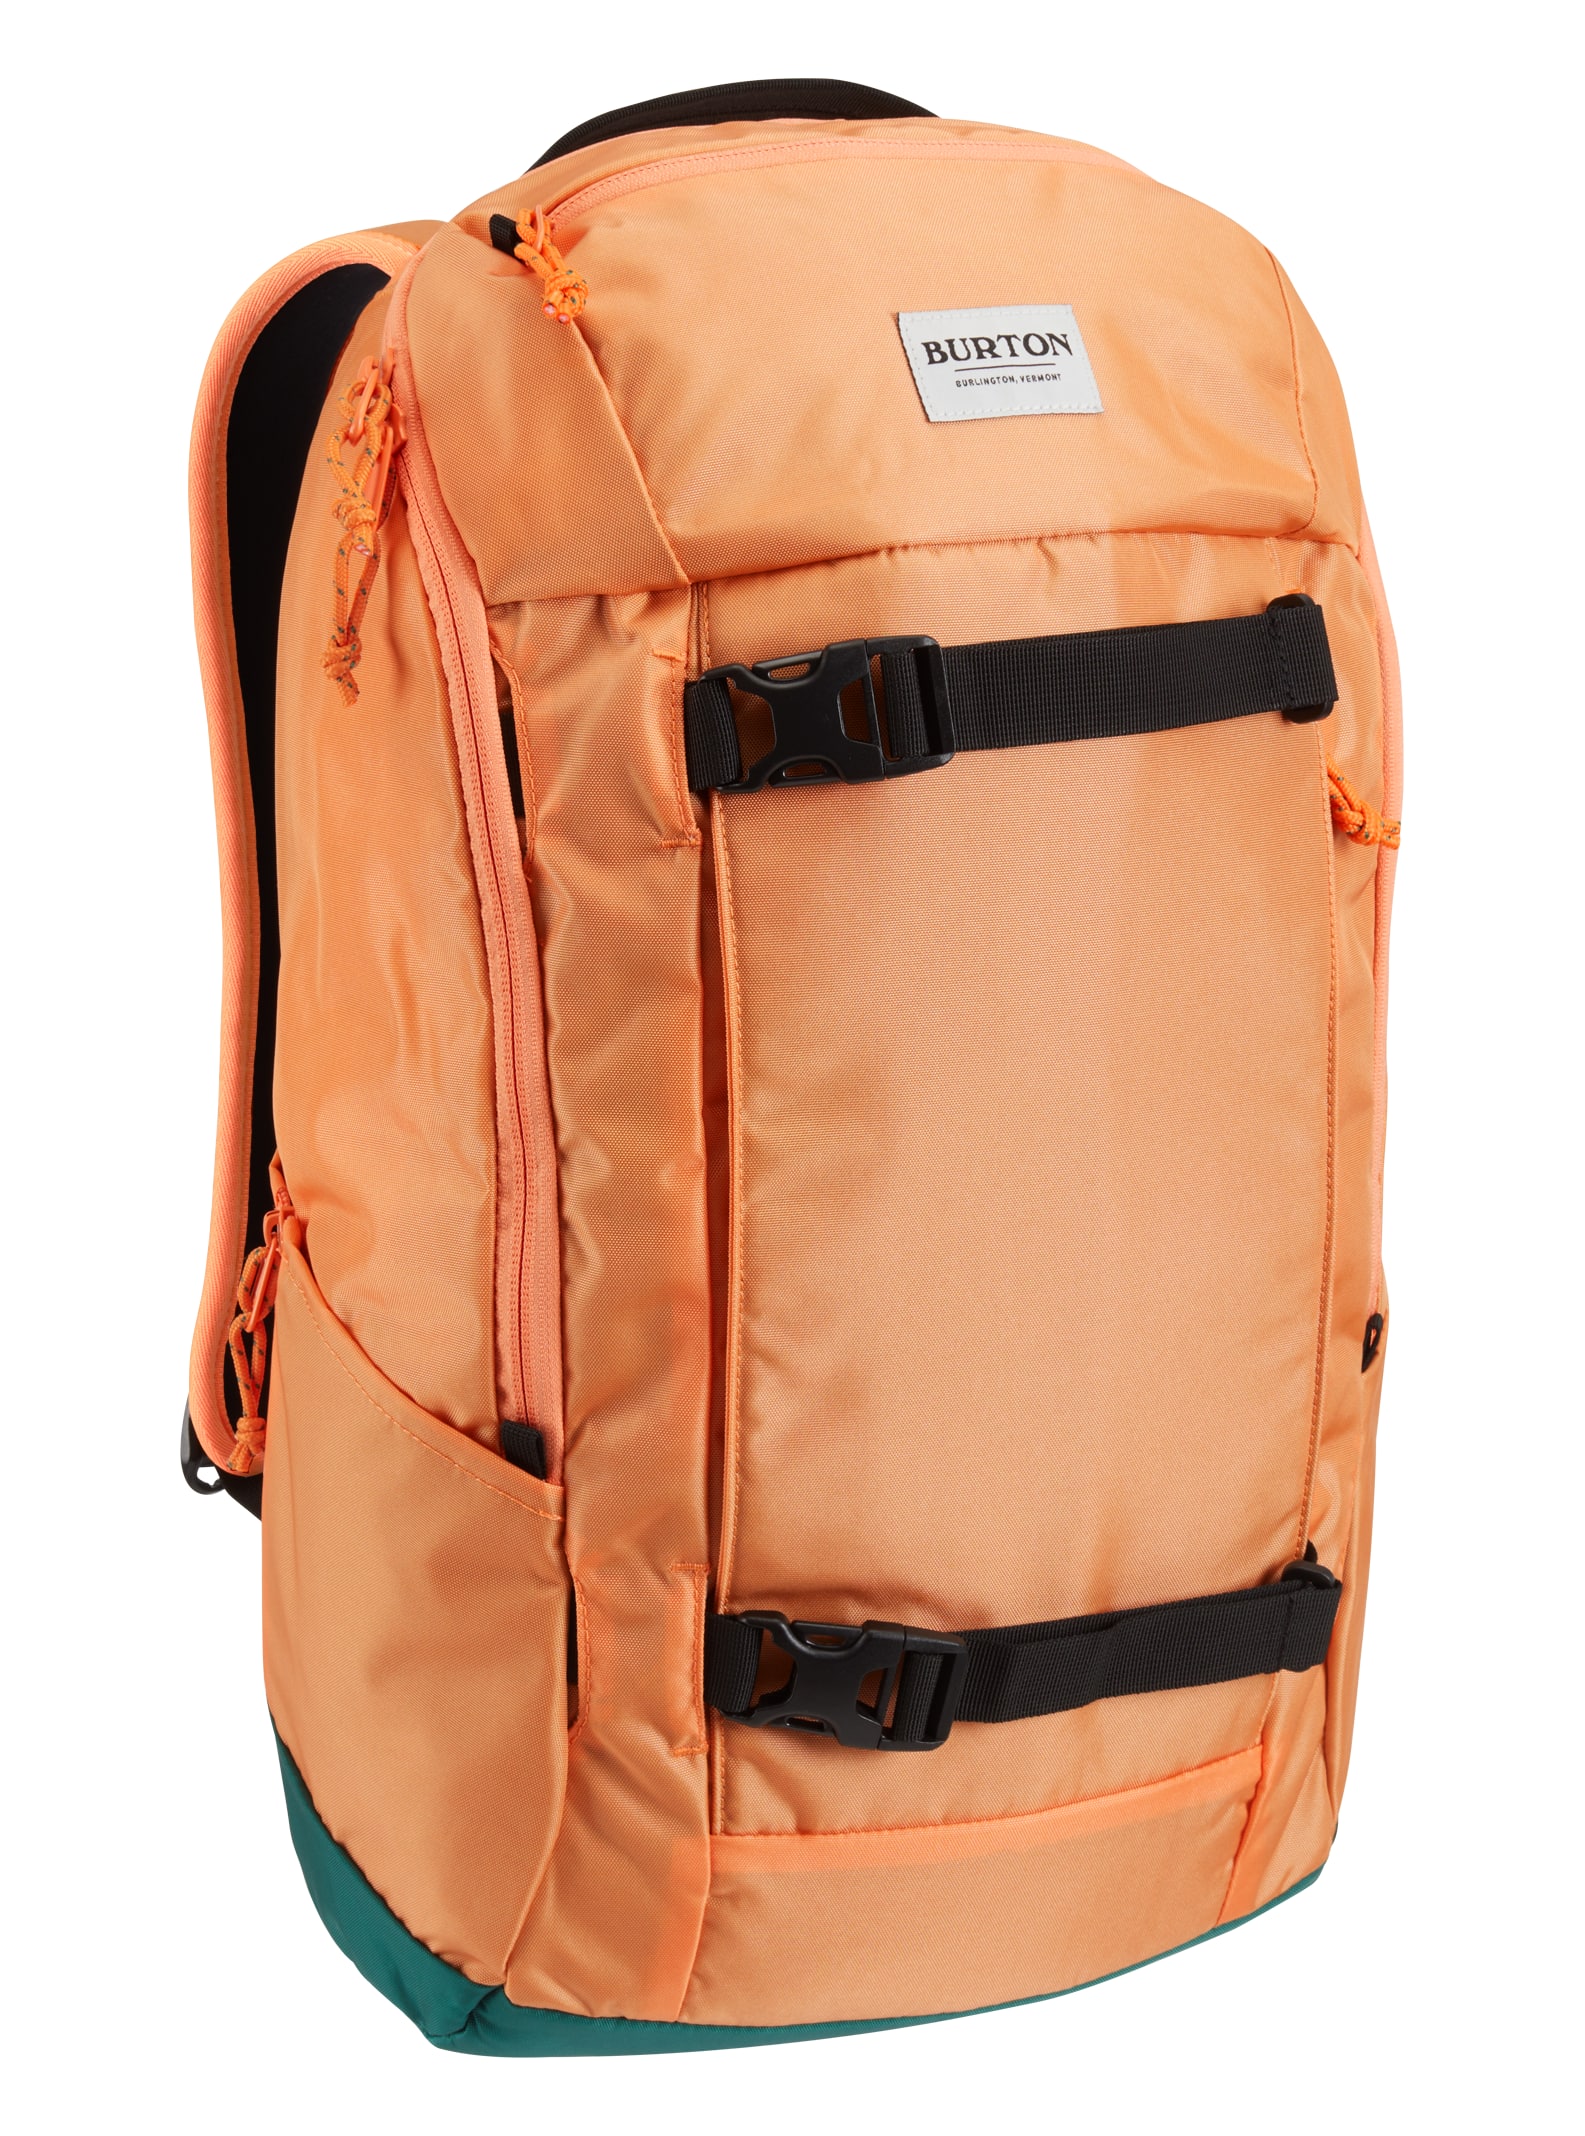 Burton Kilo 2.0 27L Backpack | Burton.com Spring 2021 US